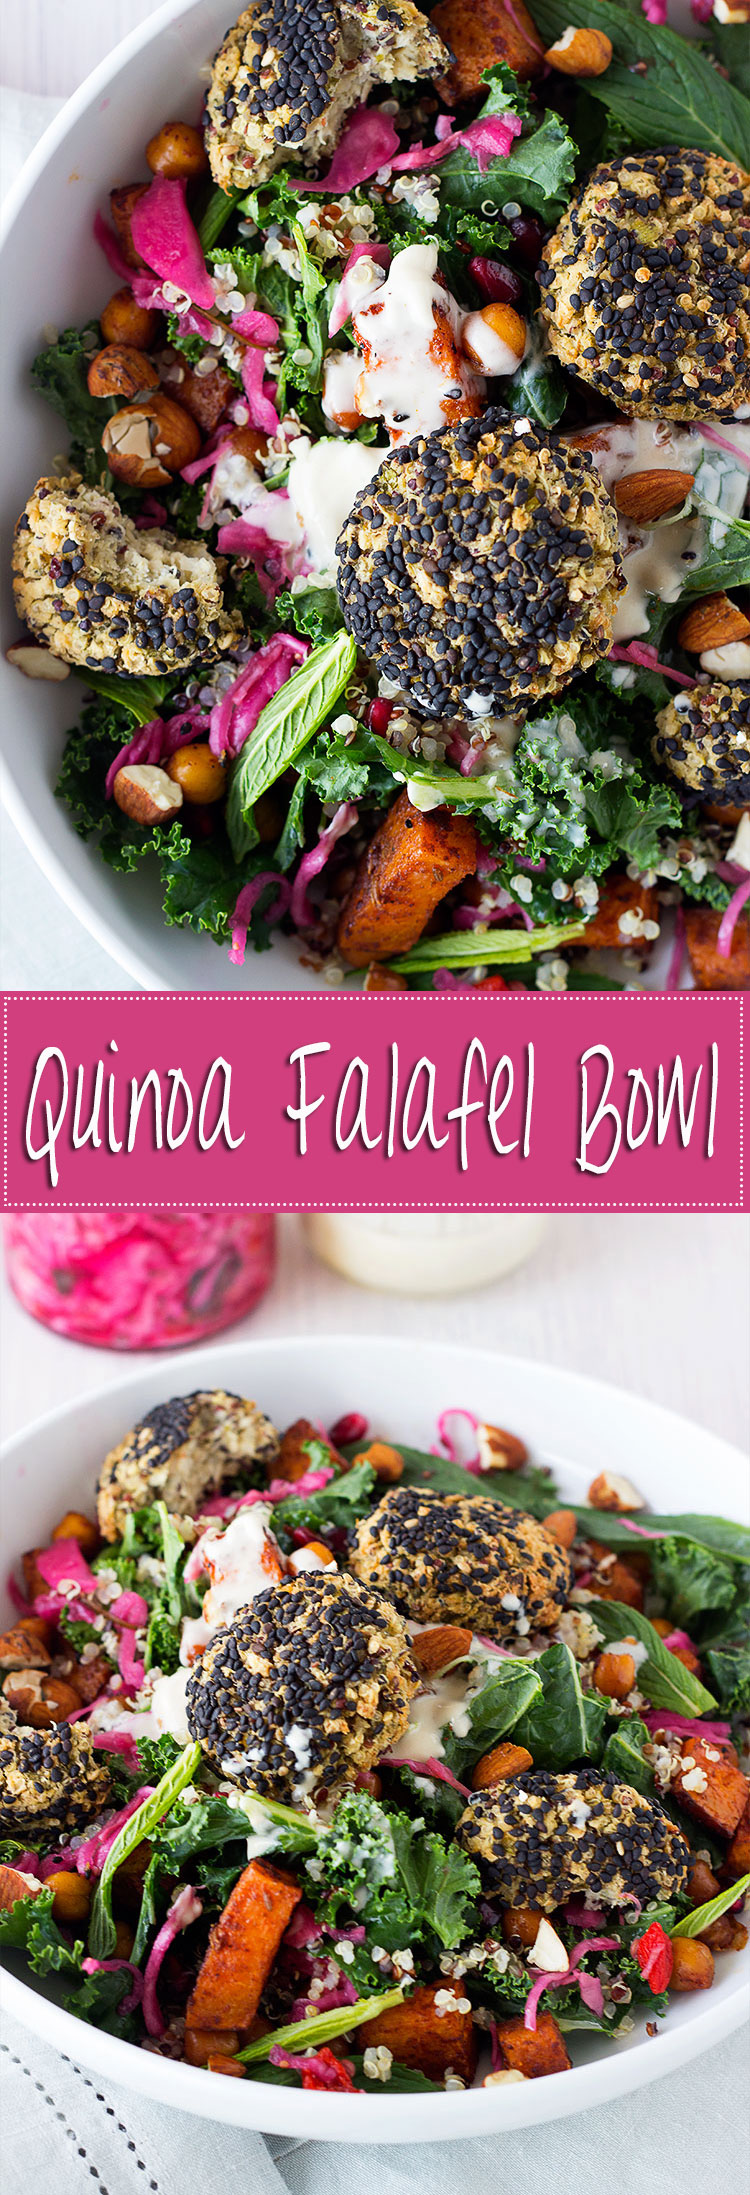 Epic Quinoa Falafel Salad Bowl | From www.sprinkleofgreen.com